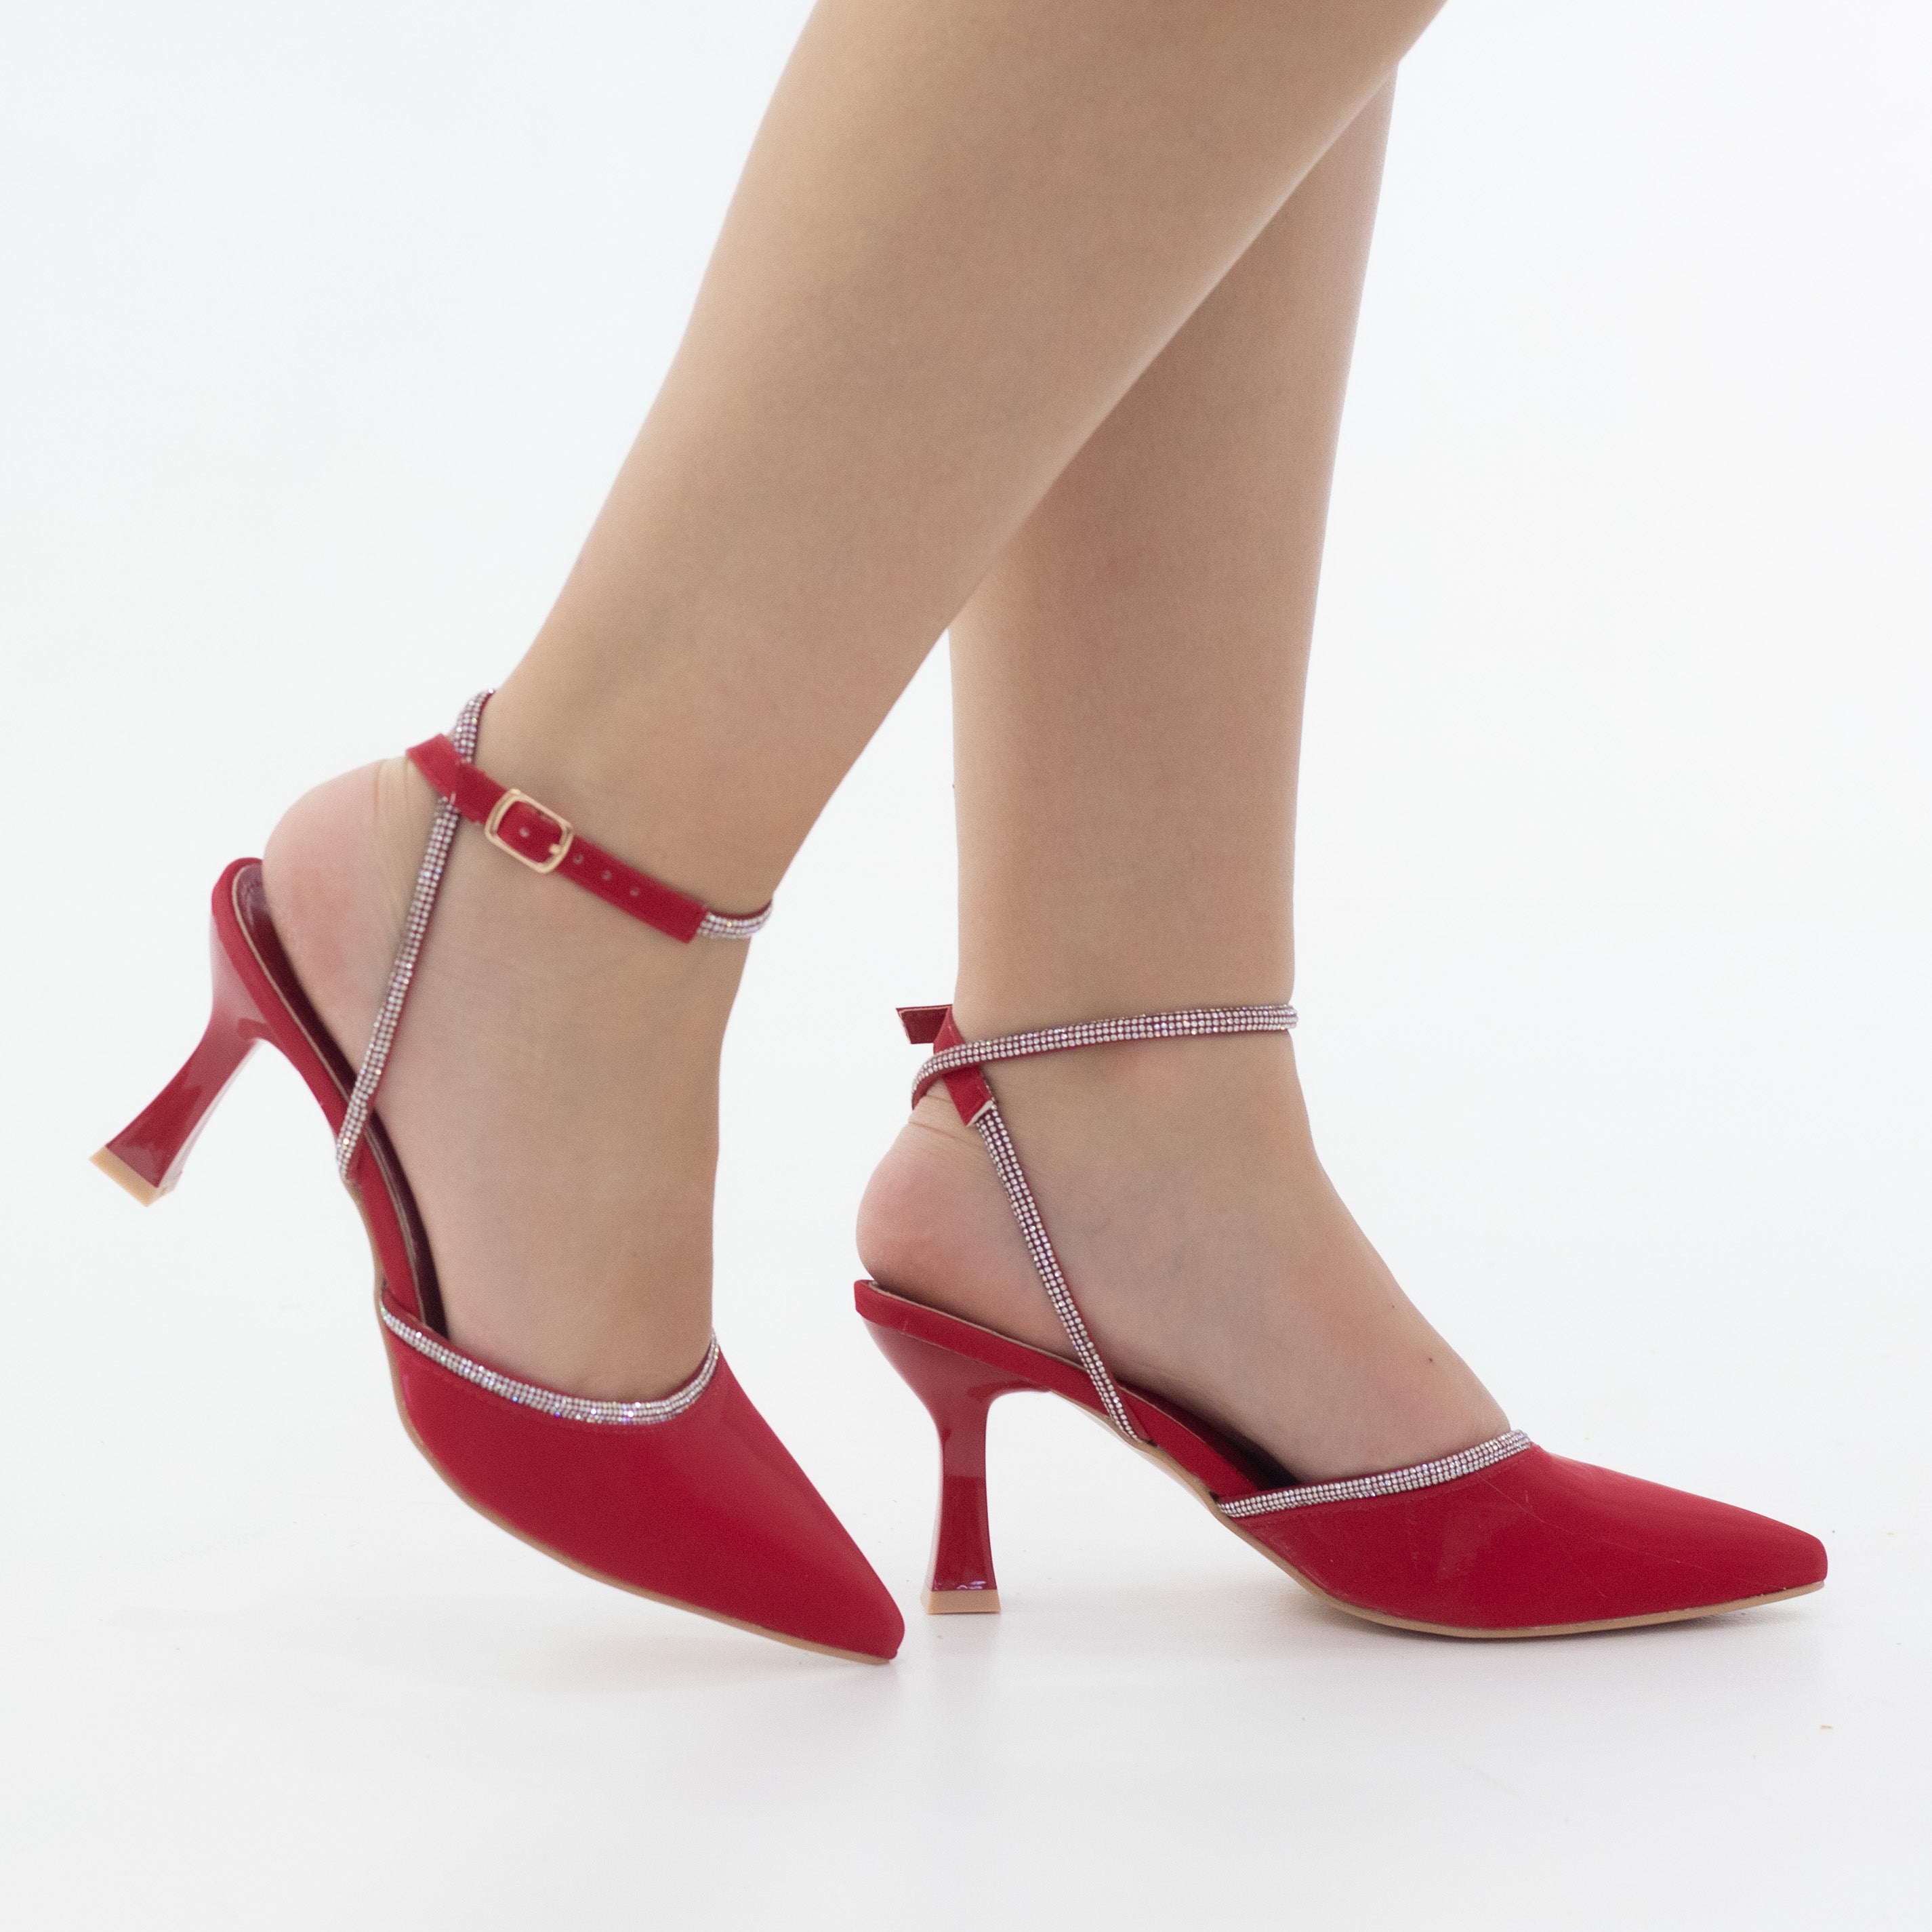 Hamisha embellished with diamante detailed on spool heel